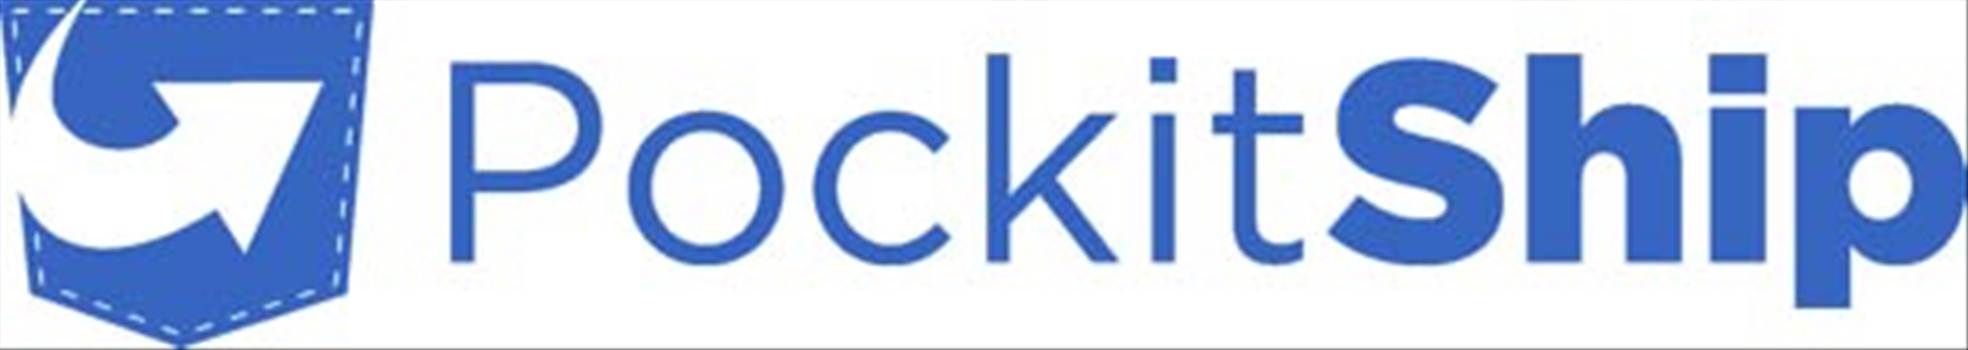 PockitShip.NEW.BLUE.jpg by urlimages2234